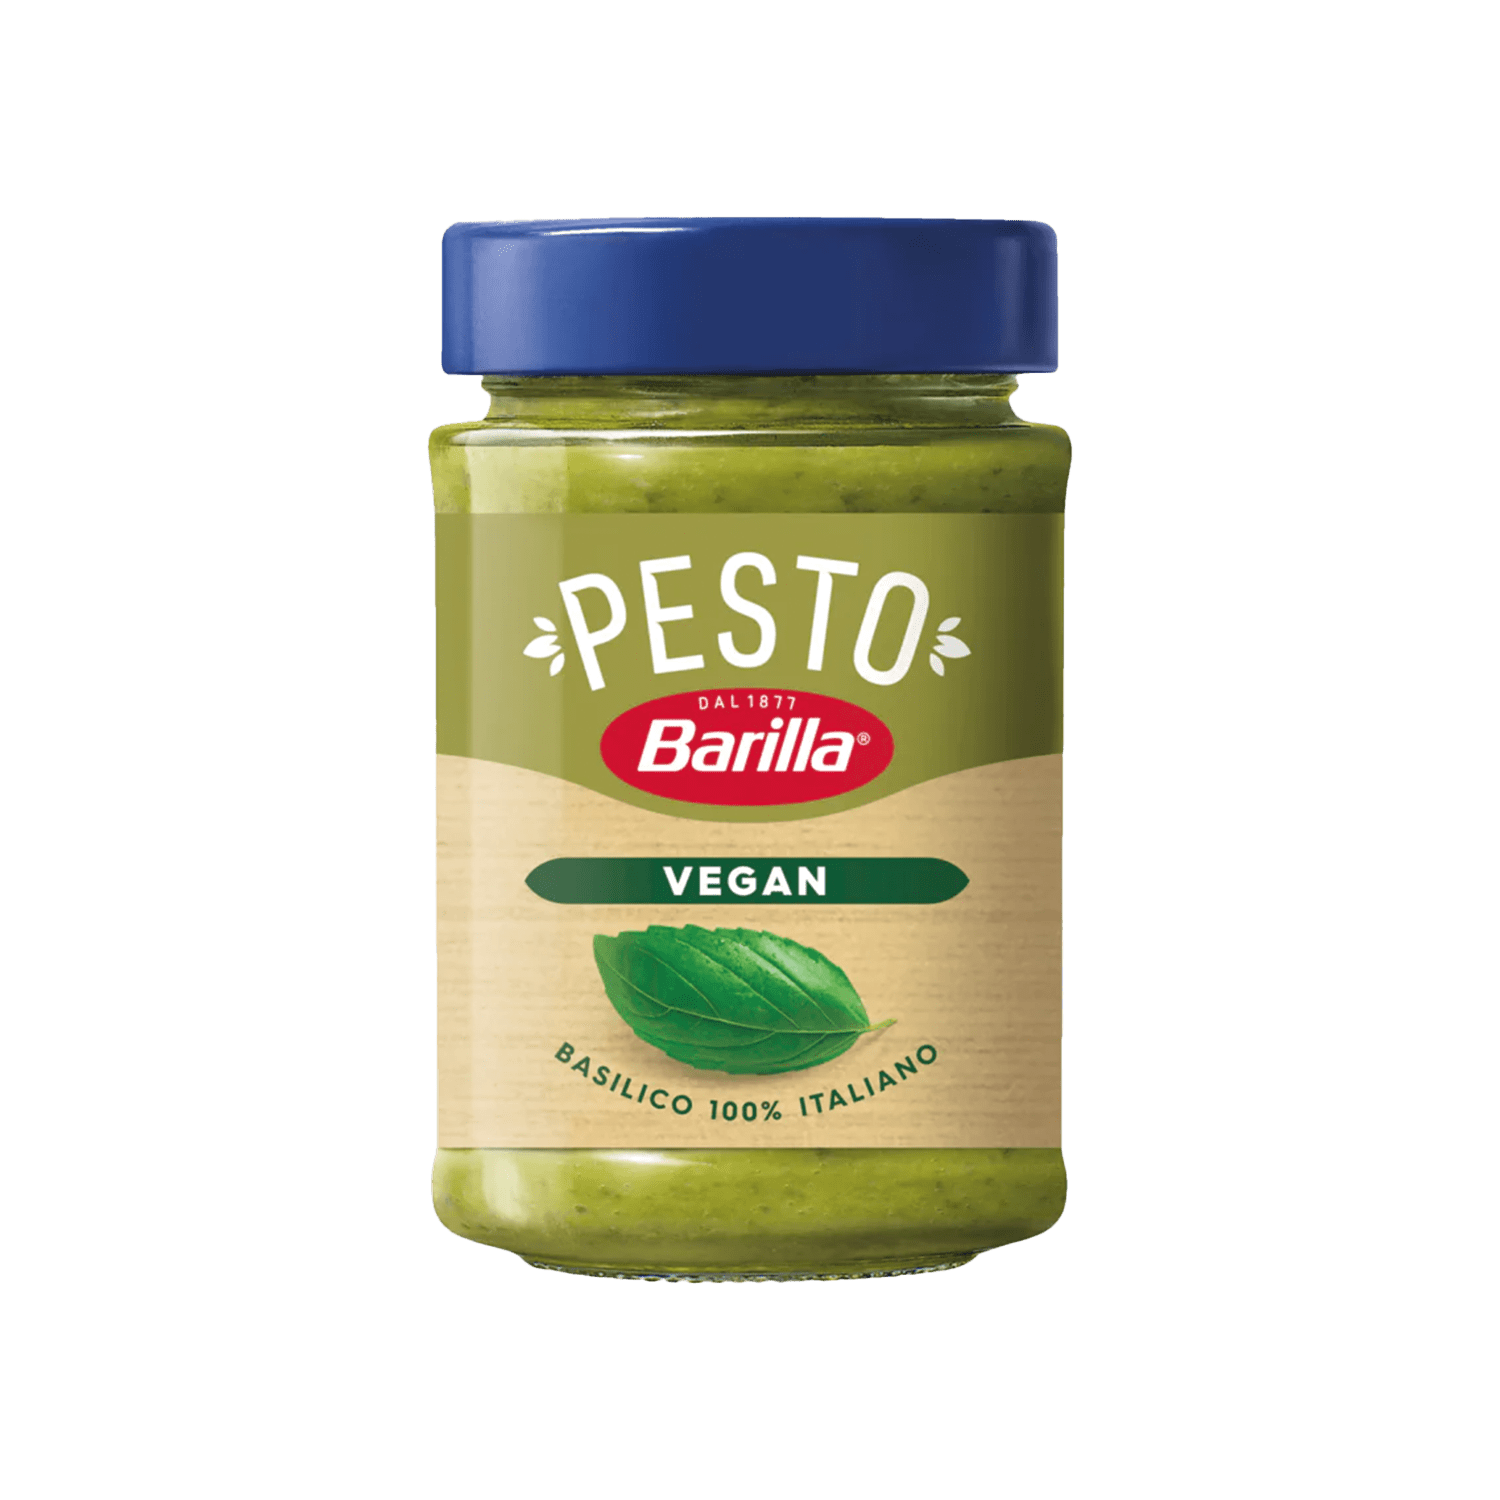 Pesto Basilico Vegan, 195g